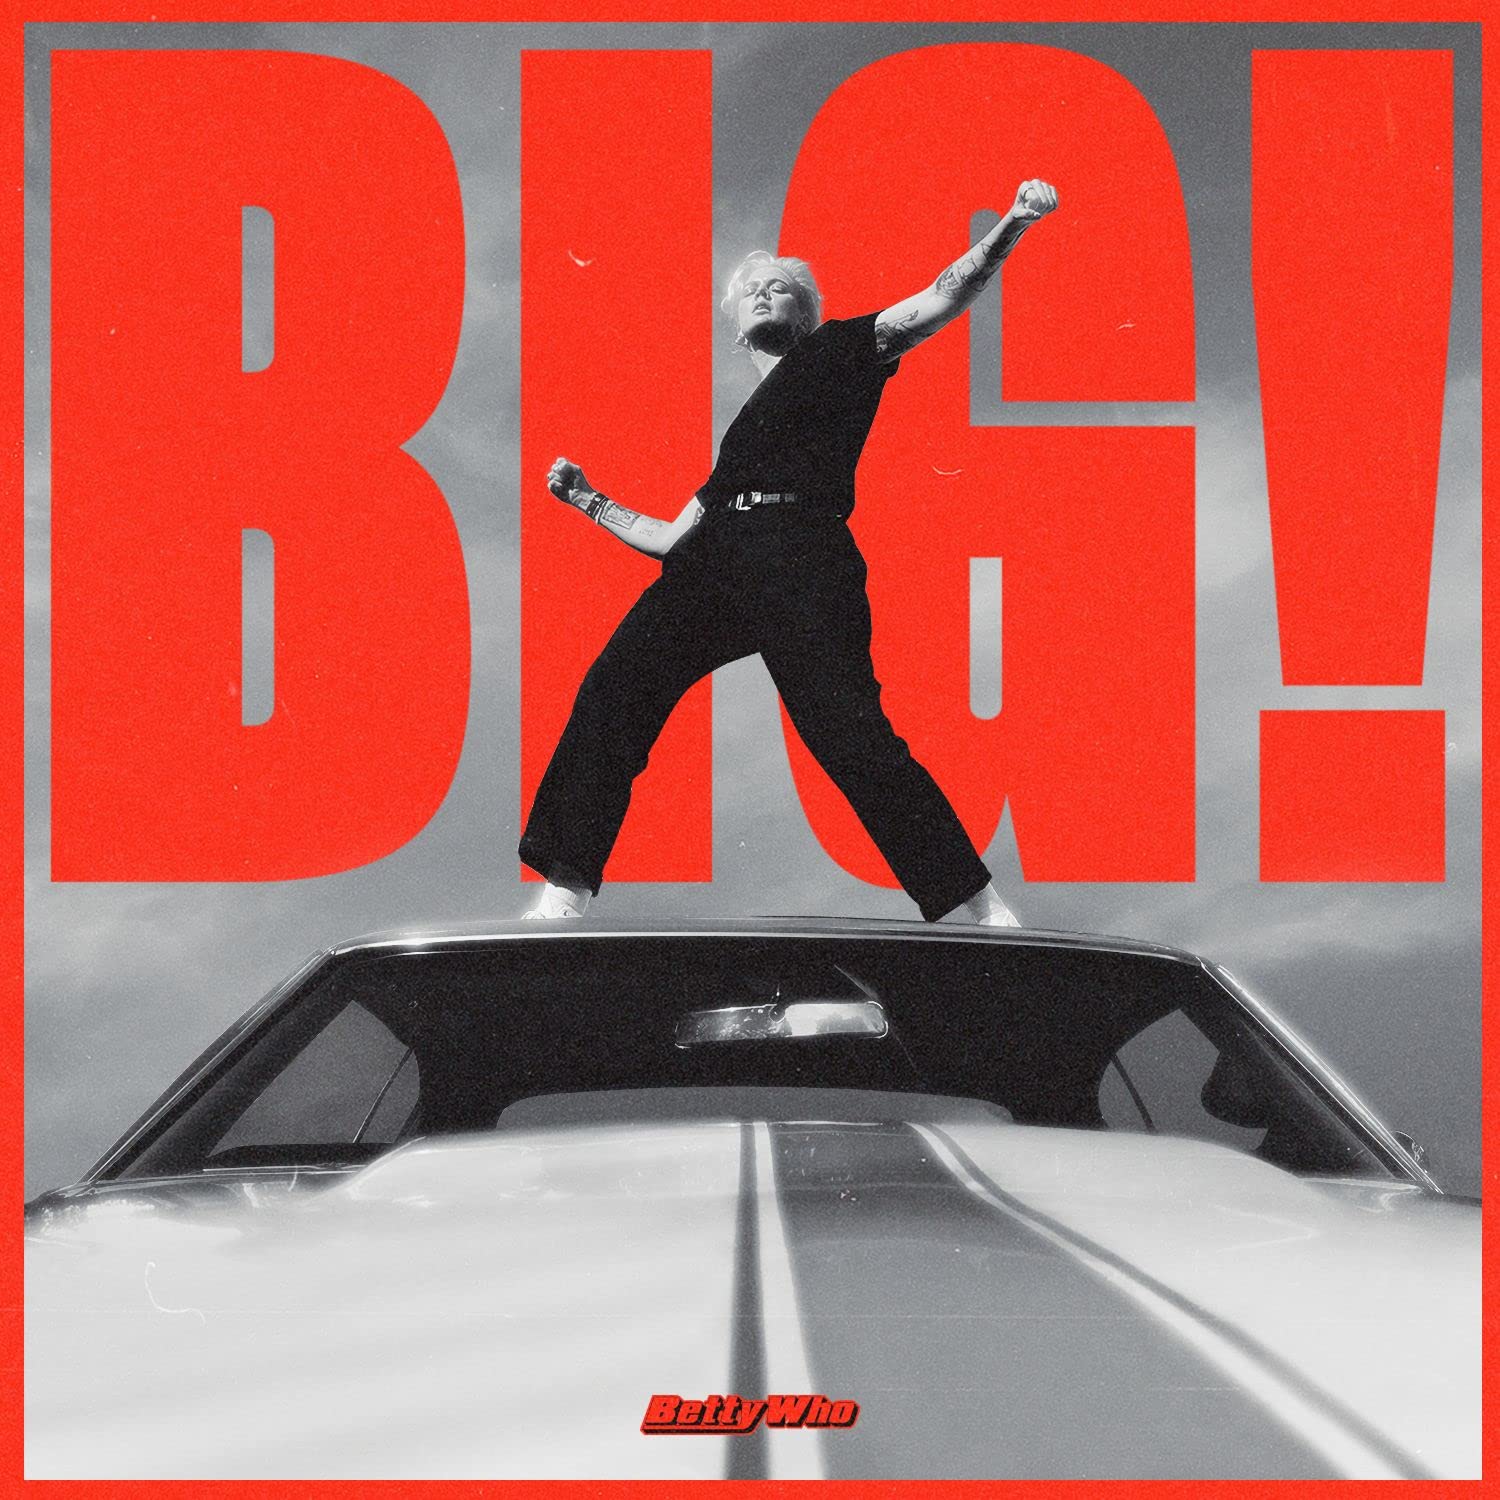 Betty Who BIG! cover artwork